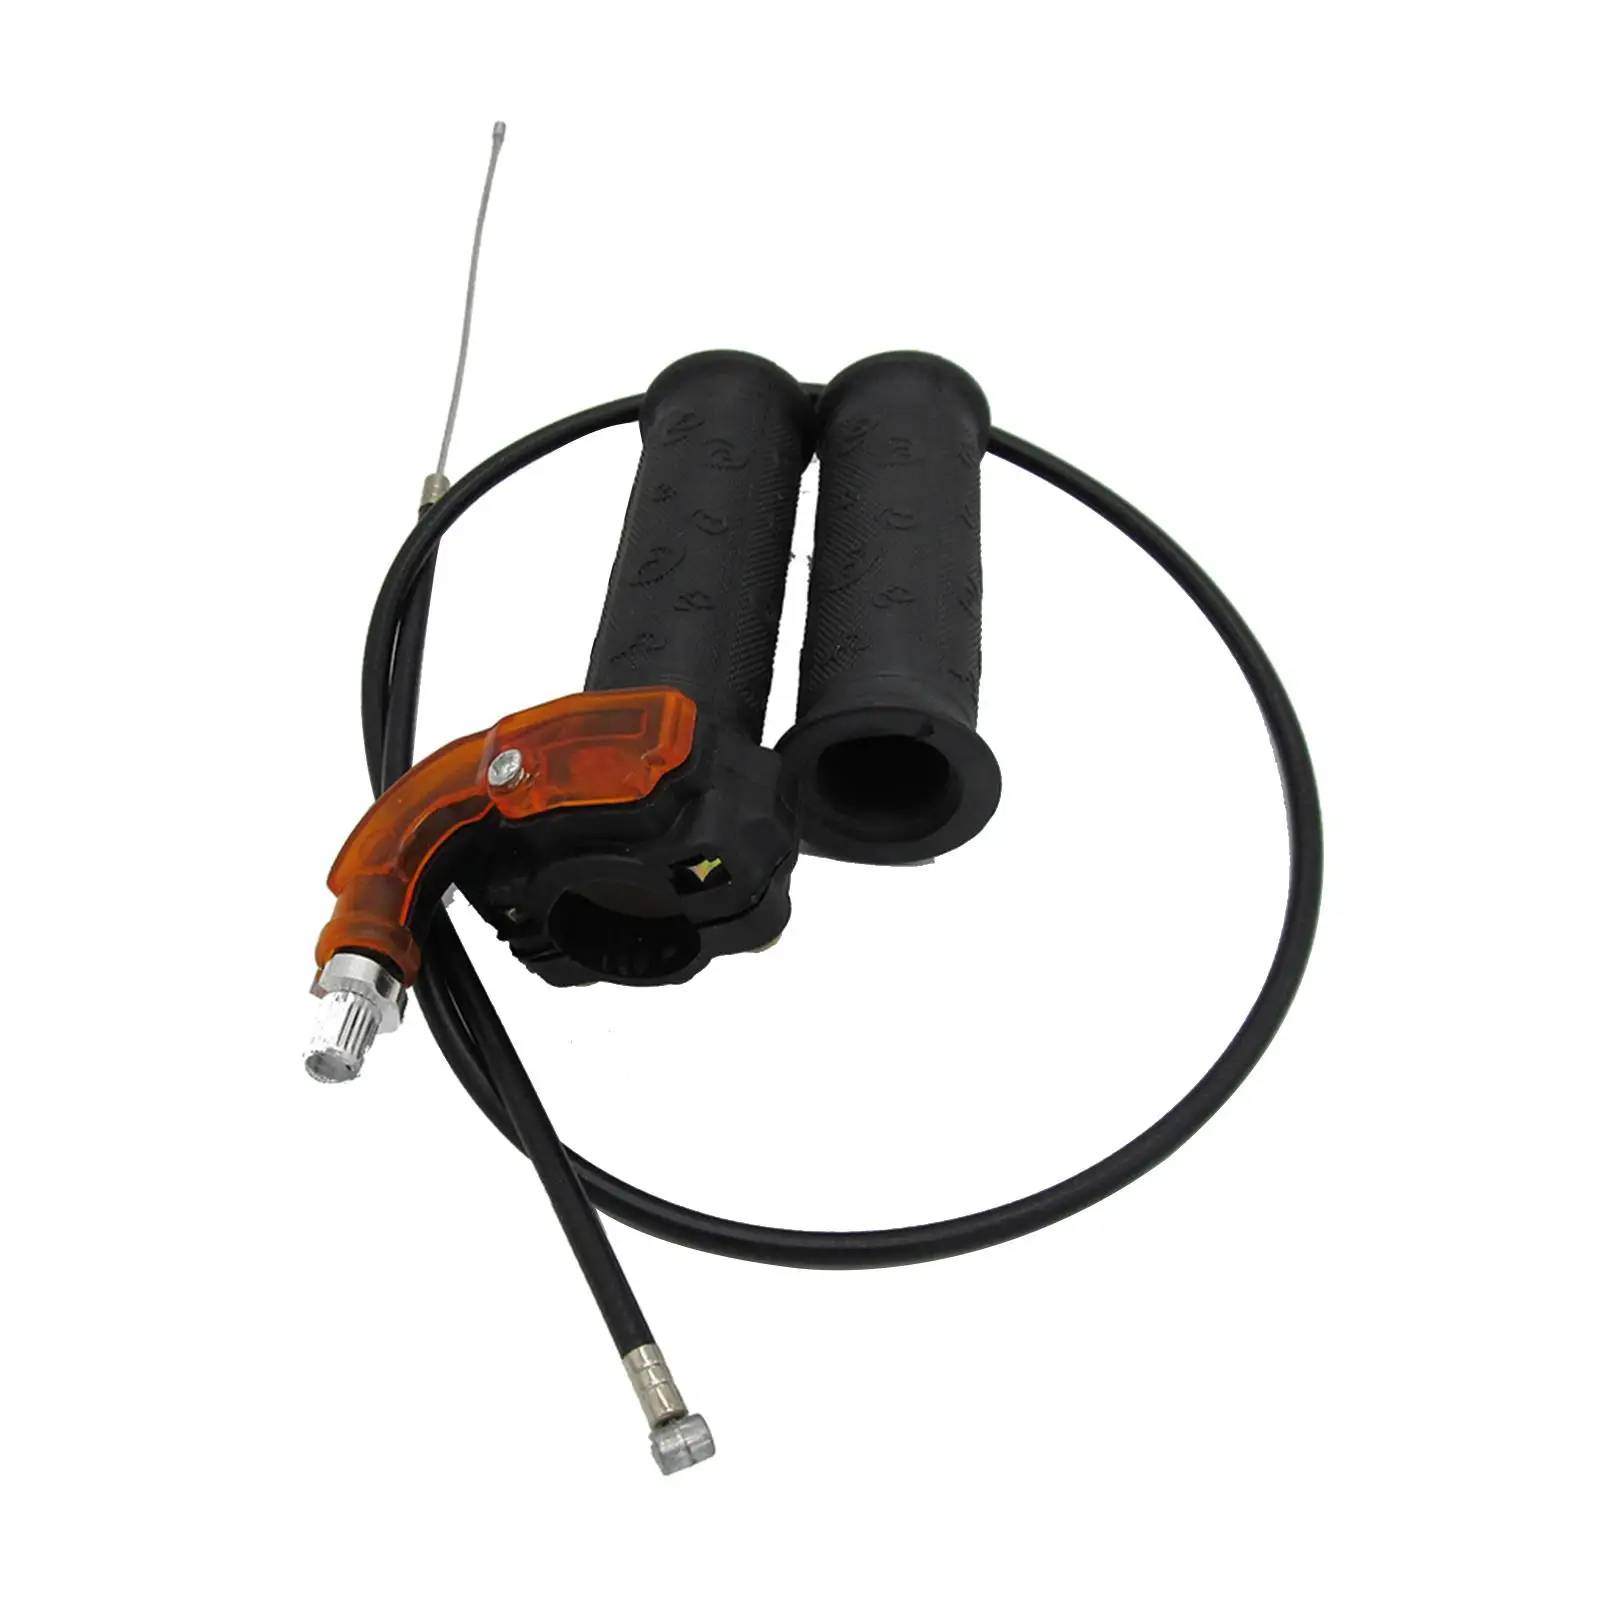 Throttle Cable Grip for 47cc 49cc ATV Quad Pocket Easy install